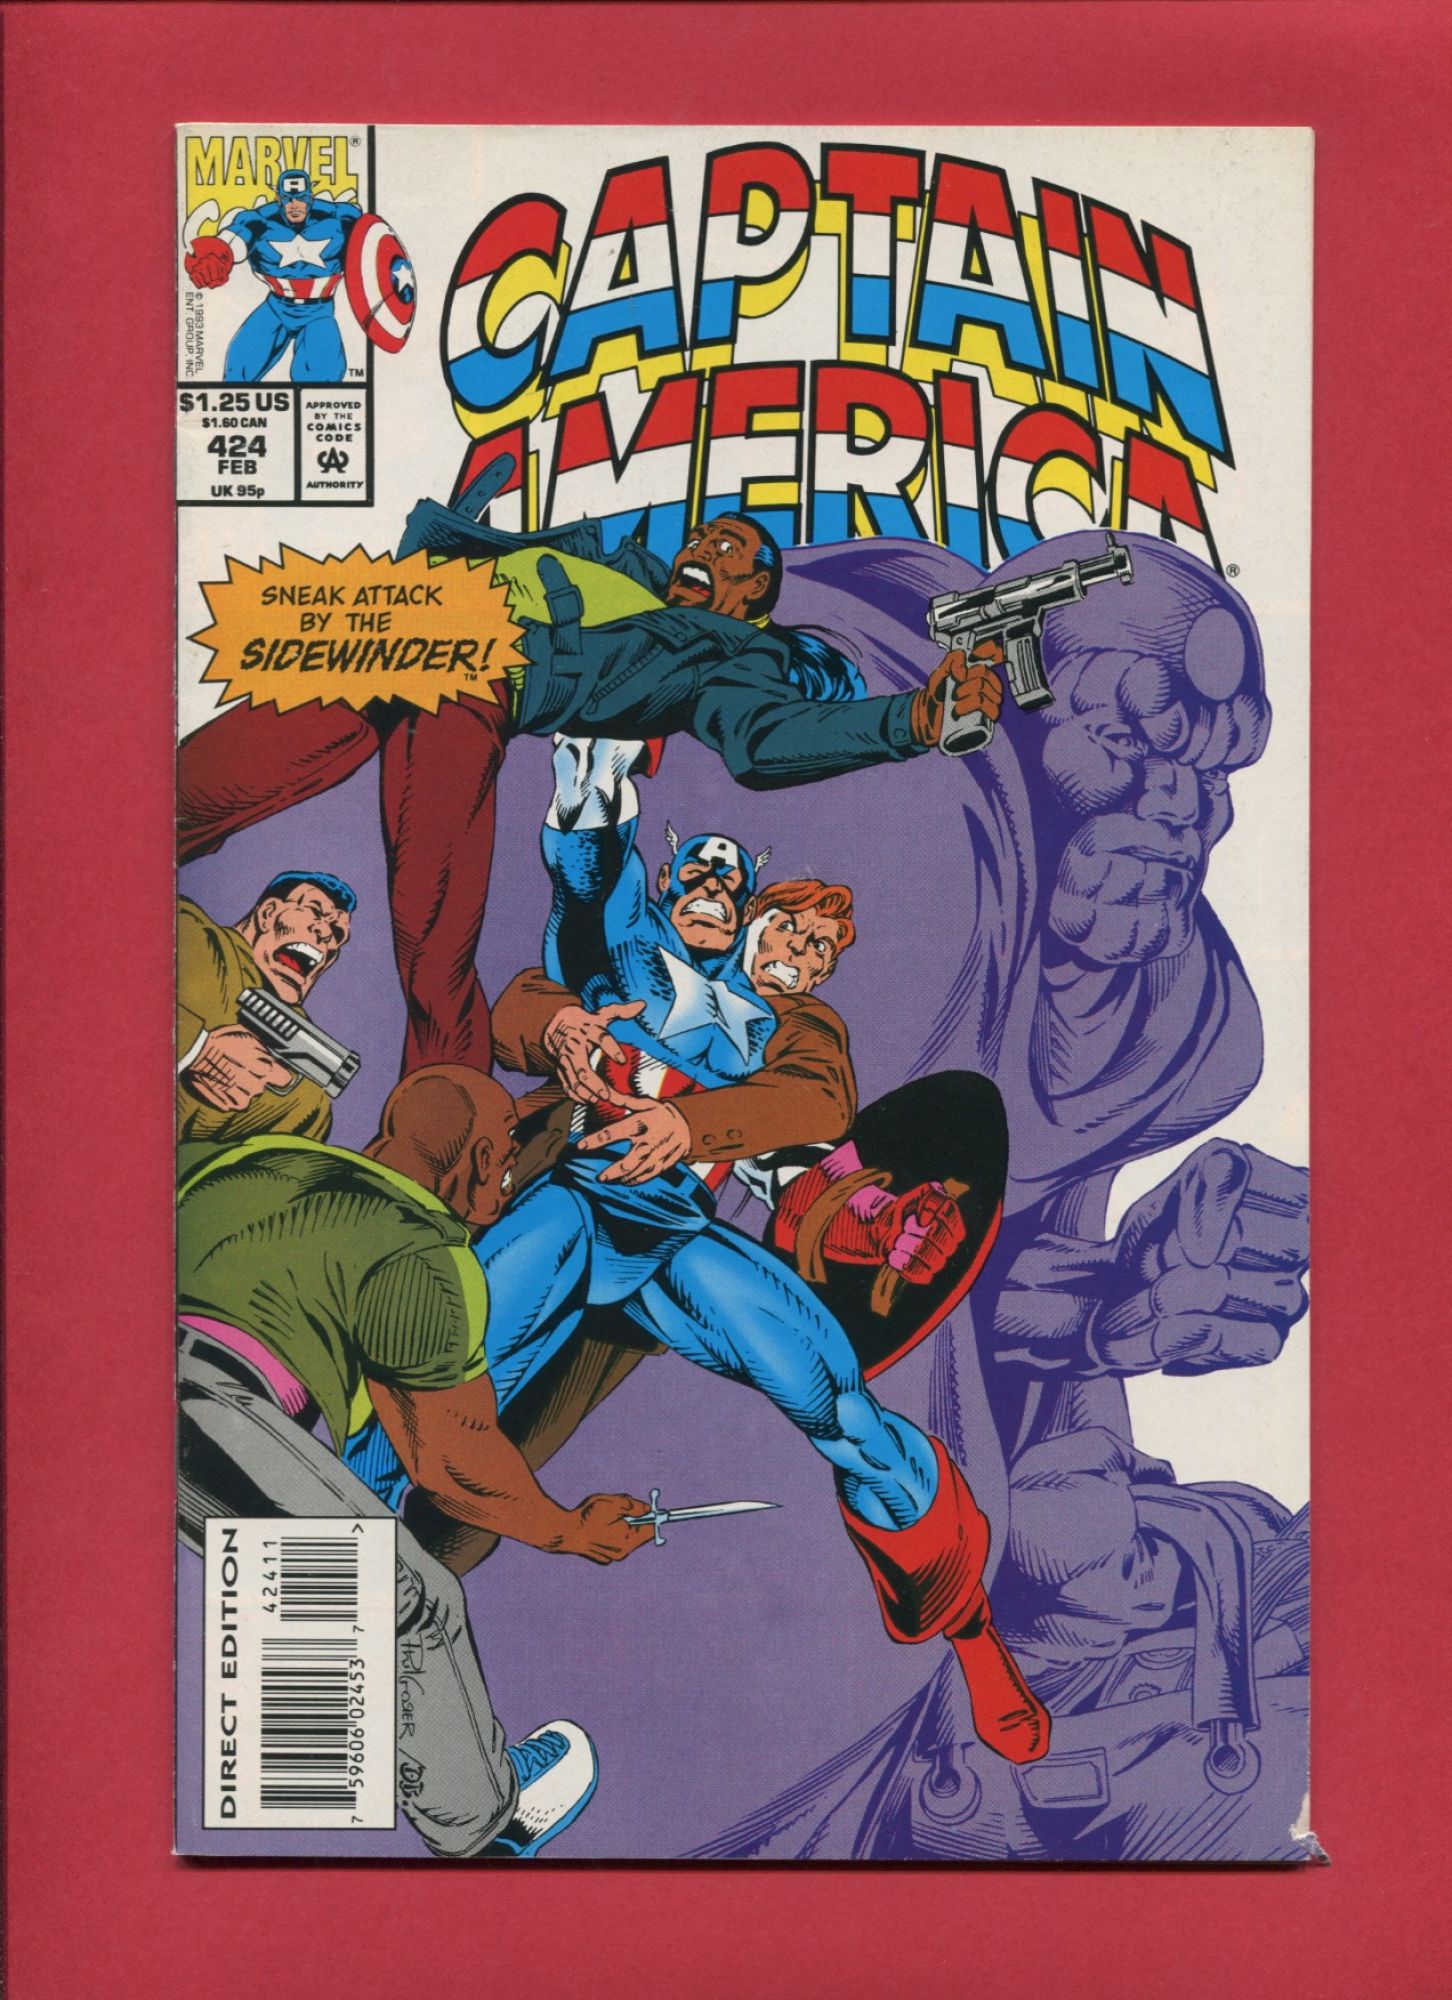 Captain America #424, Feb 1994, 7.5 VF-